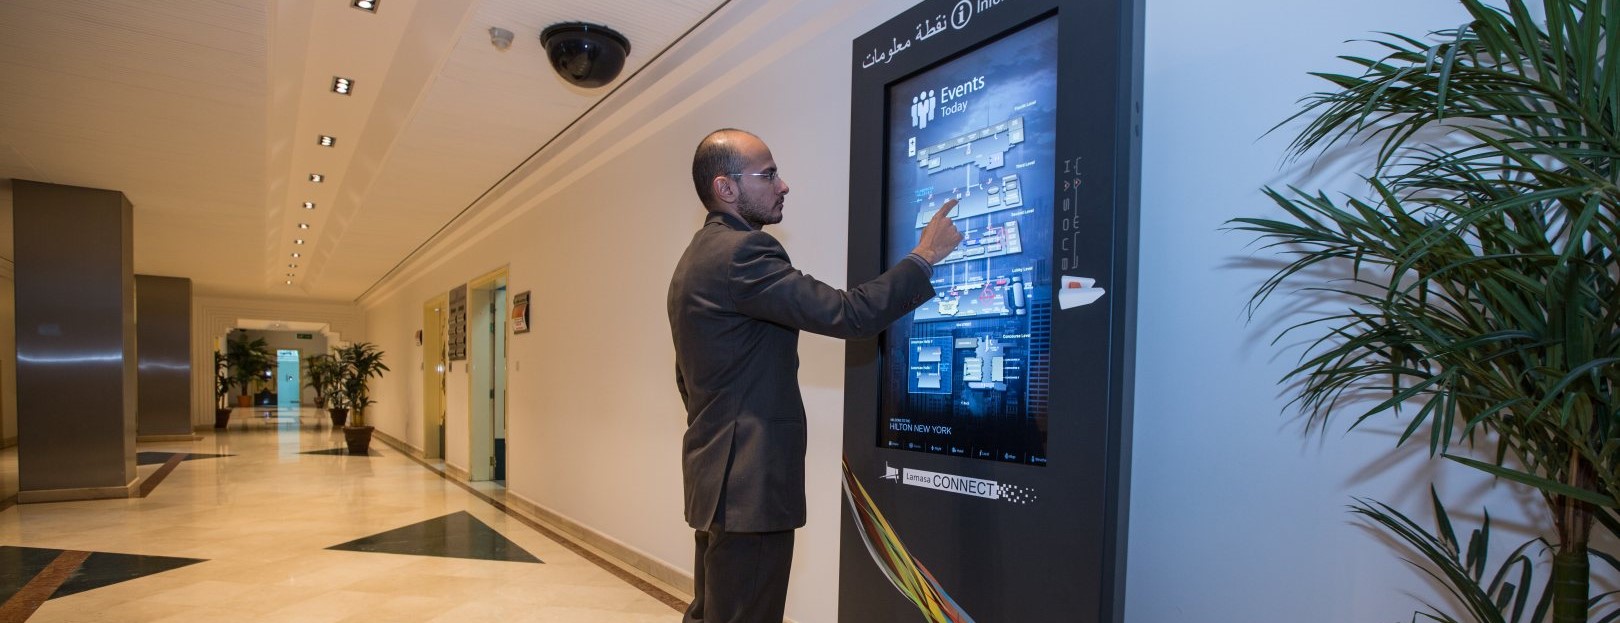 interactive information kiosk